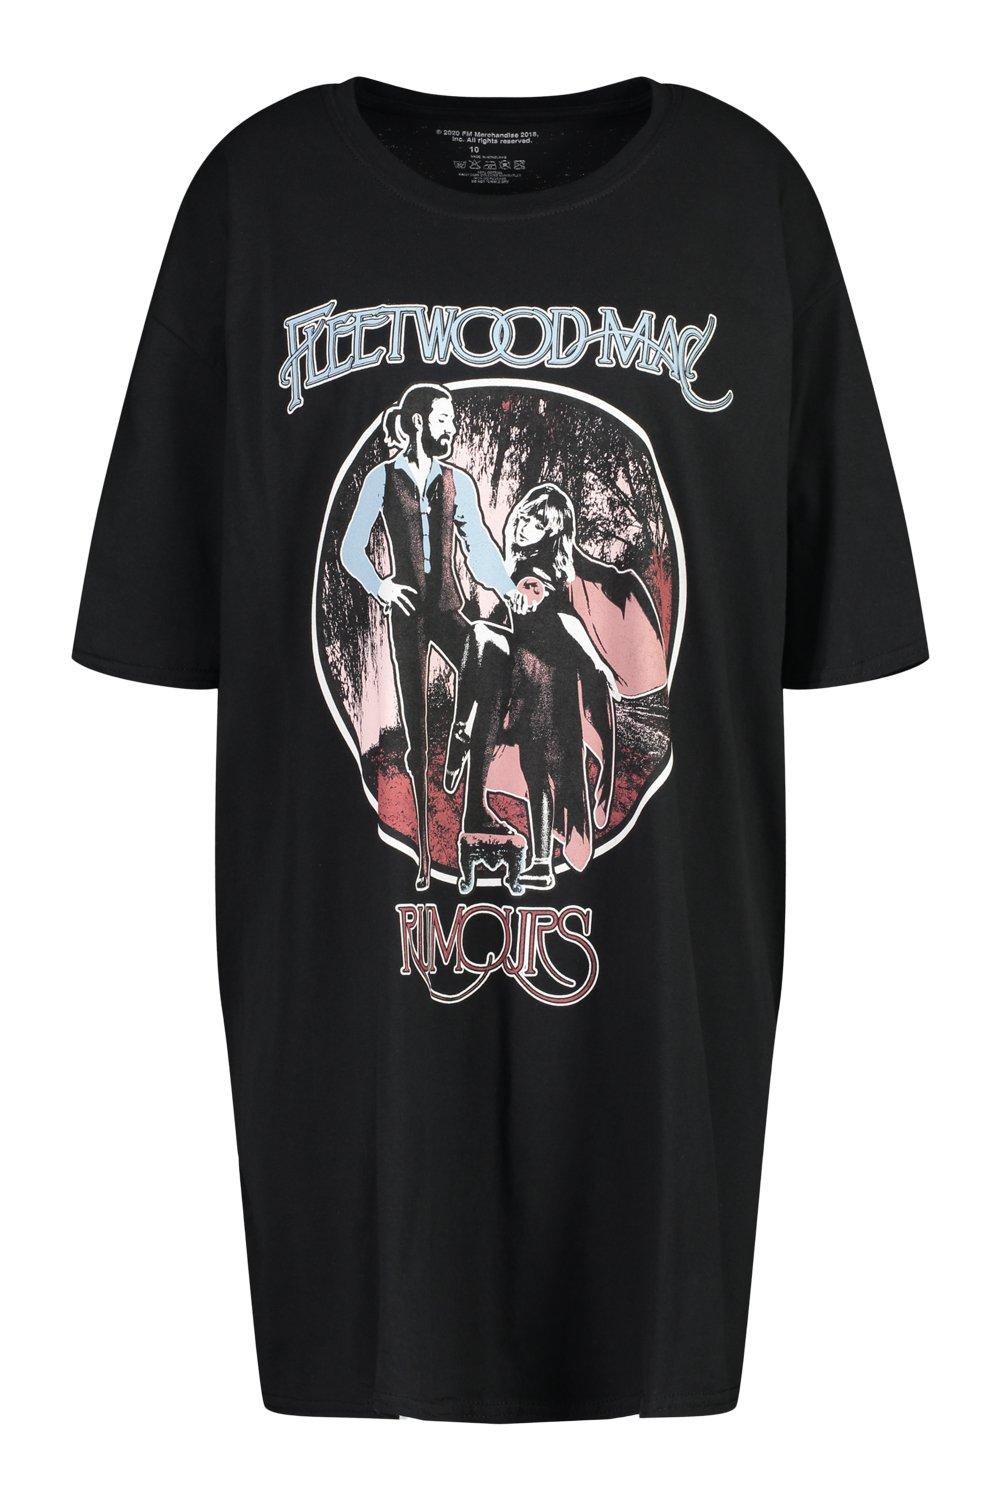 Fleetwood Mac T-Shirt Dress | boohoo